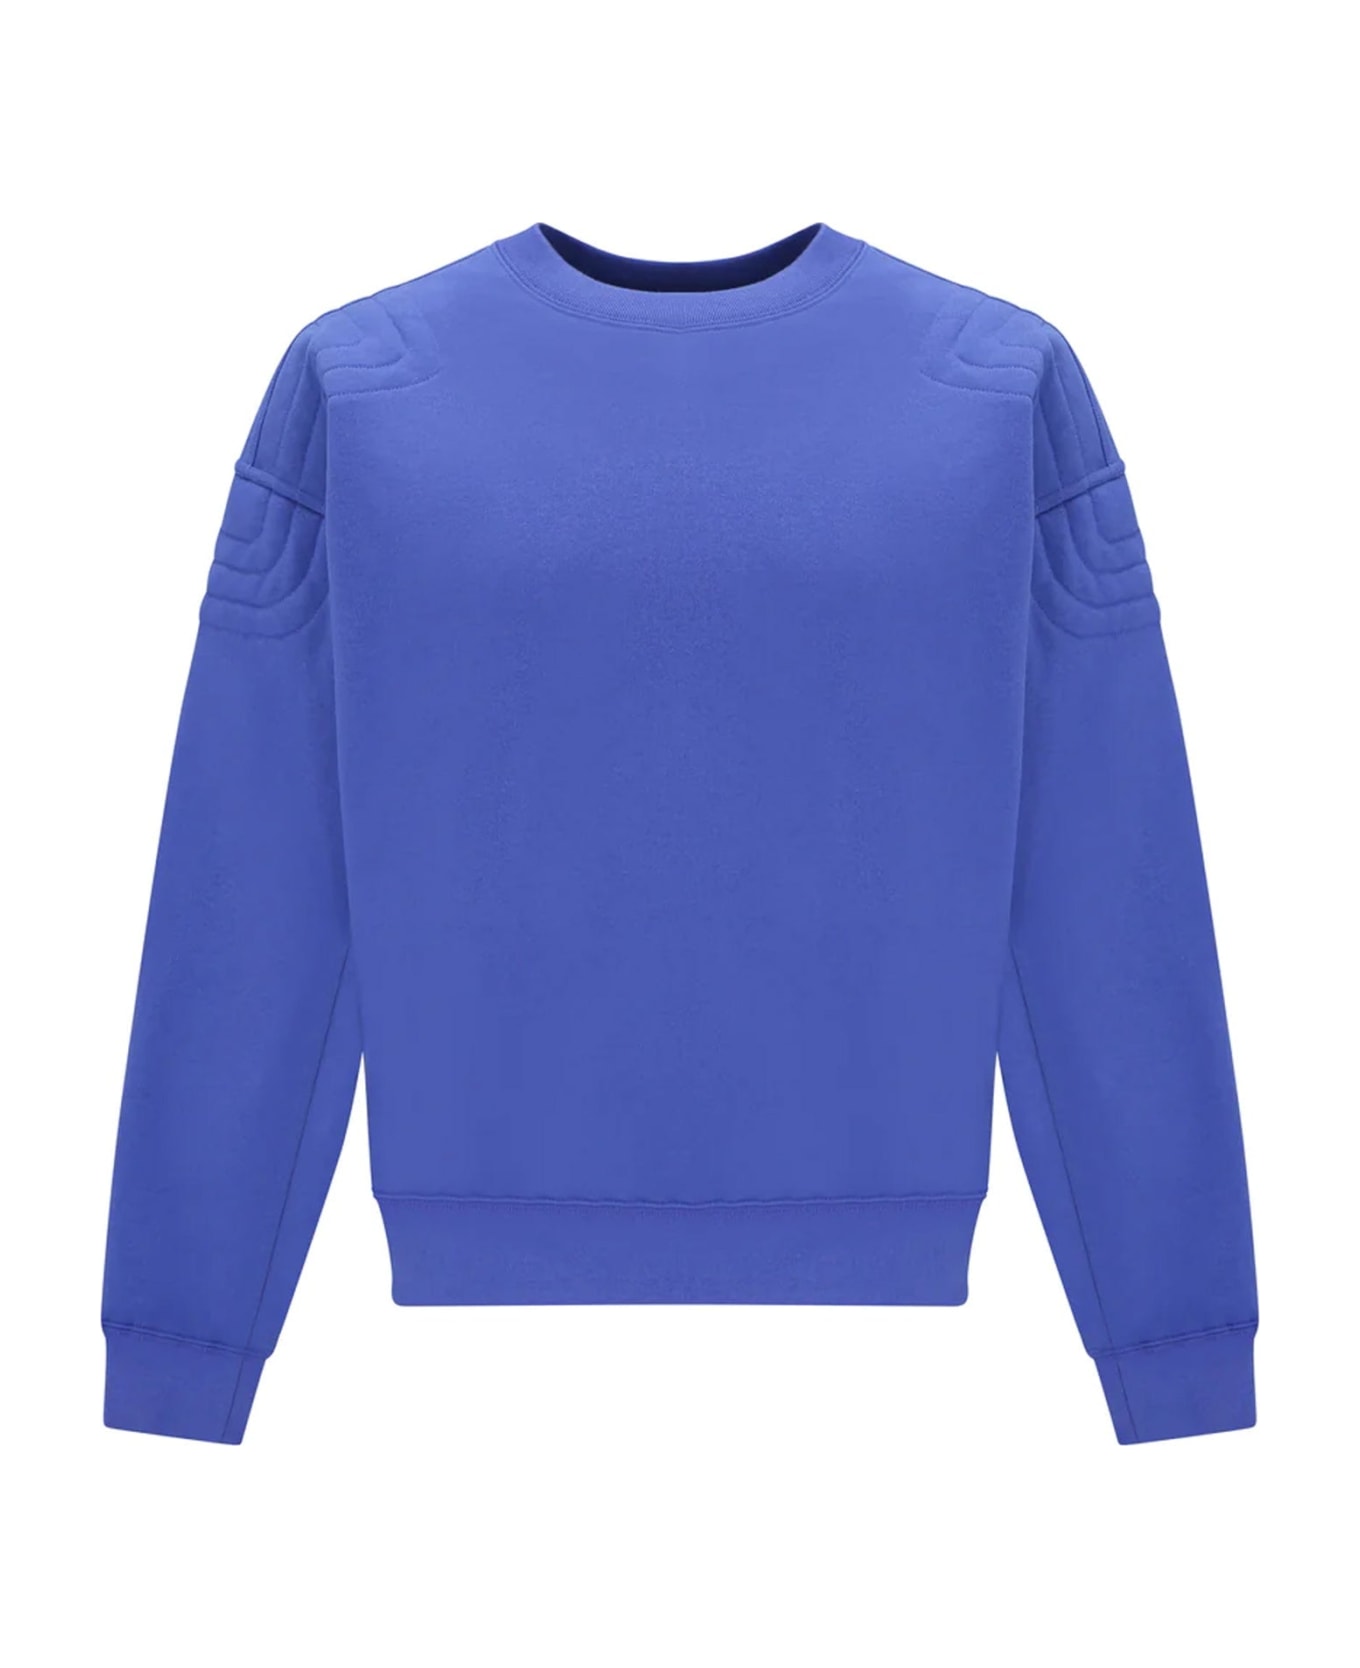 Gucci Cotton Sweatshirt - Blue フリース